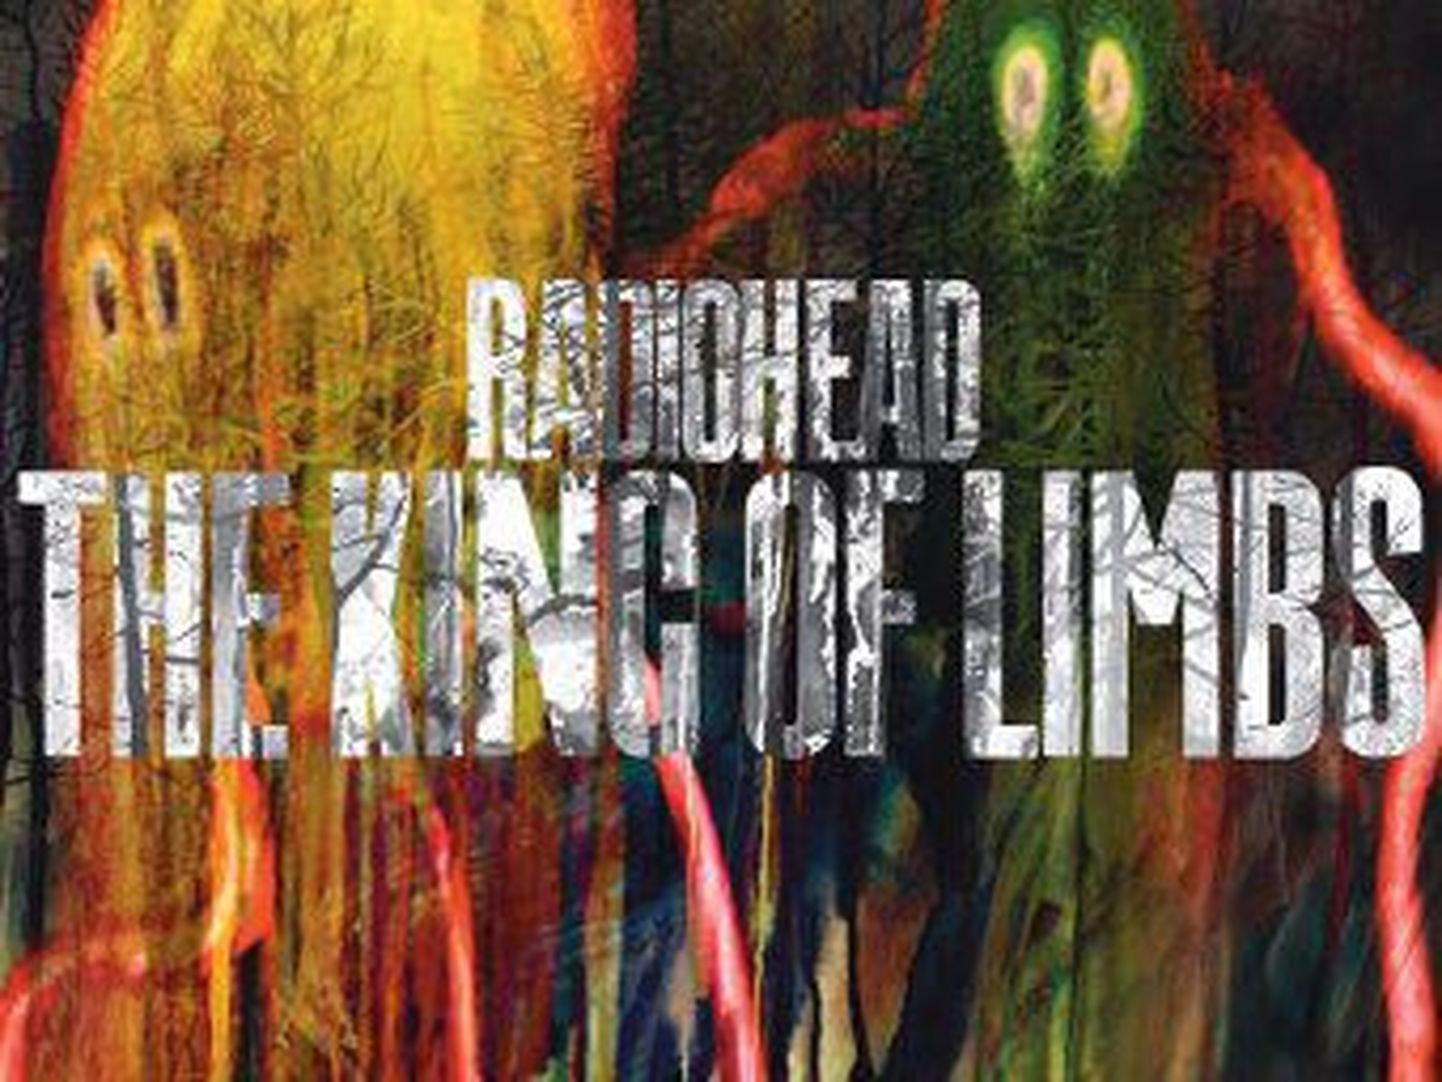 Radiohead "The King of Limbs"